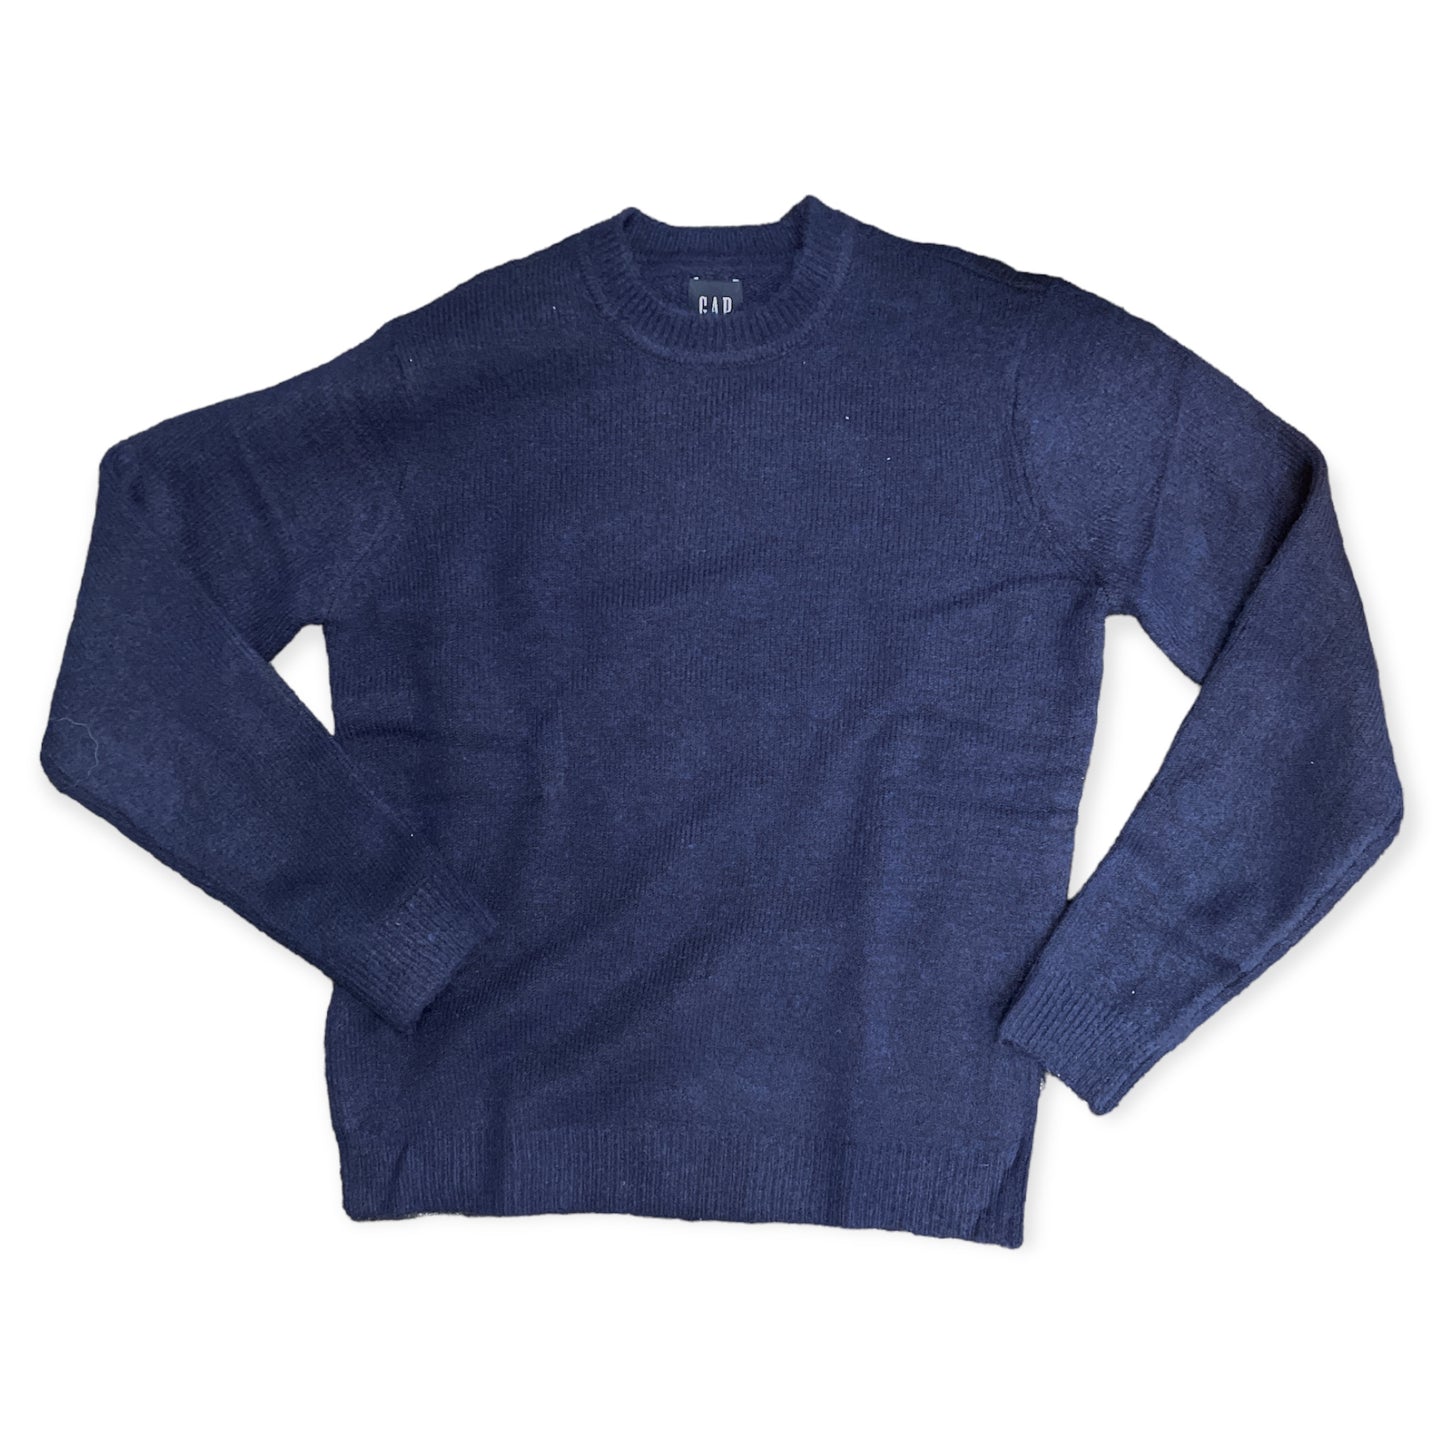 Gap Men's Soft & Comfortable Classic Fit Crew Neck Sweater